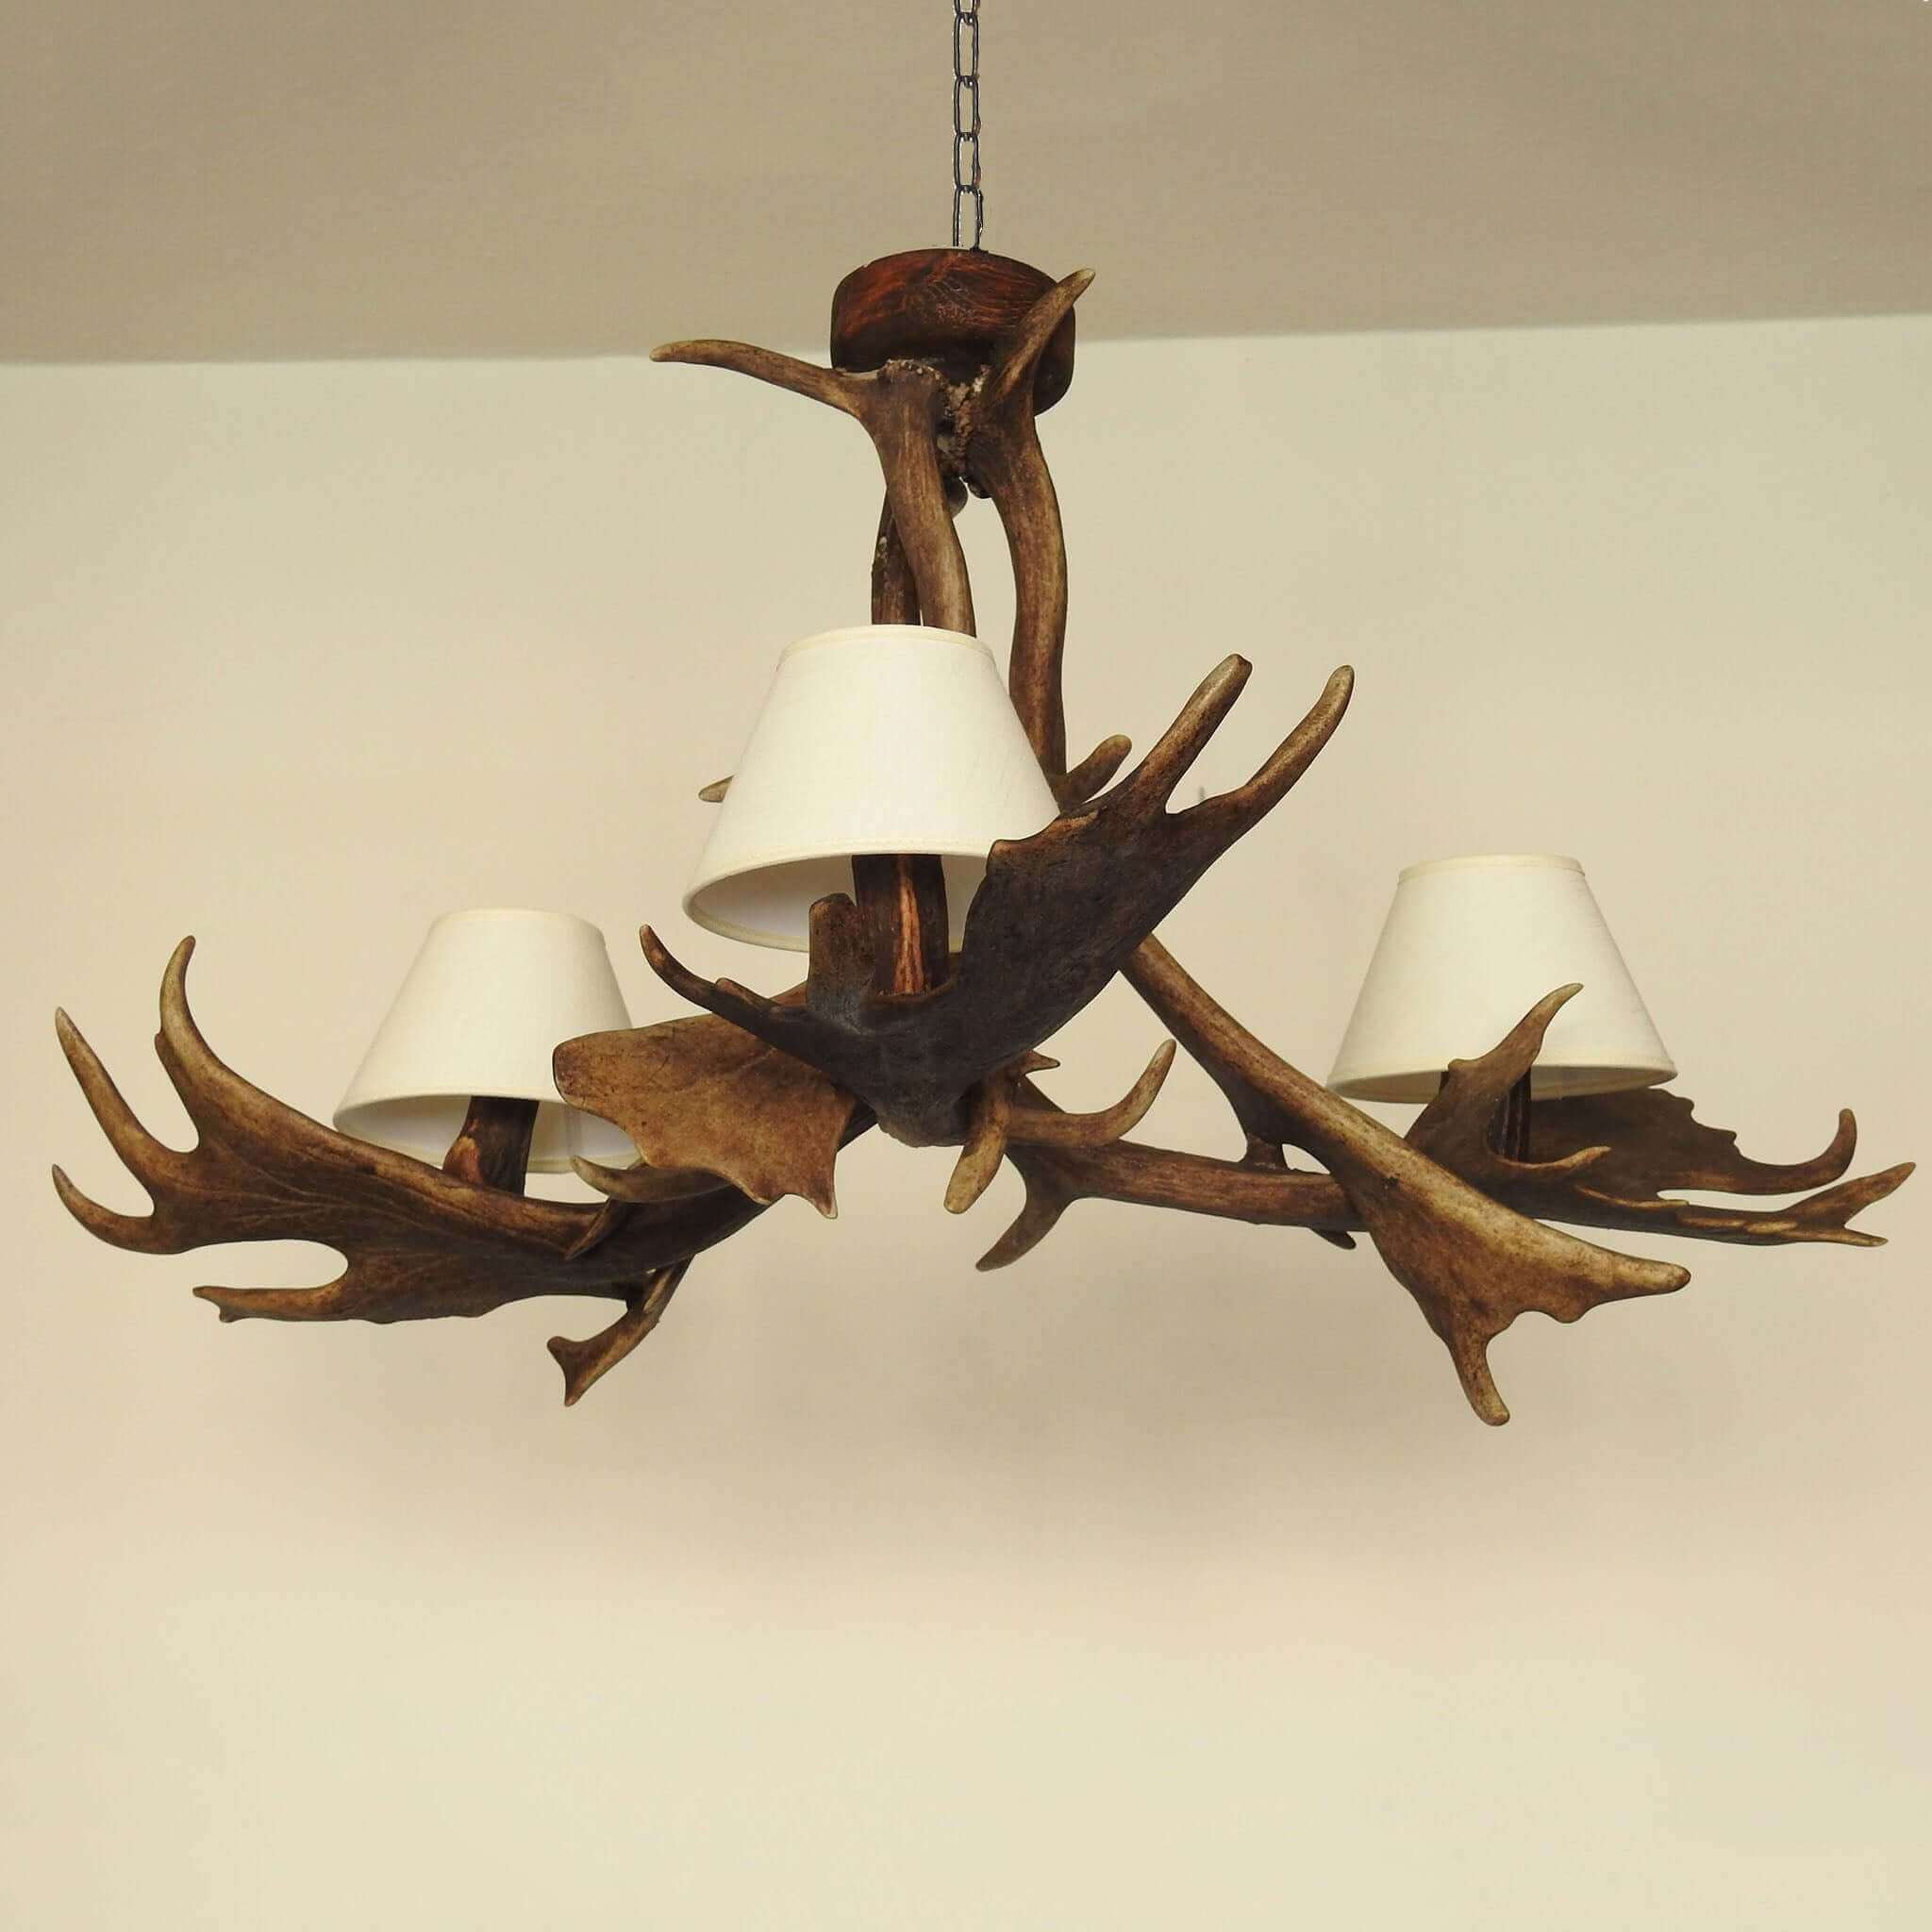 3 lights antler chandelier made of fallow deer antlers.